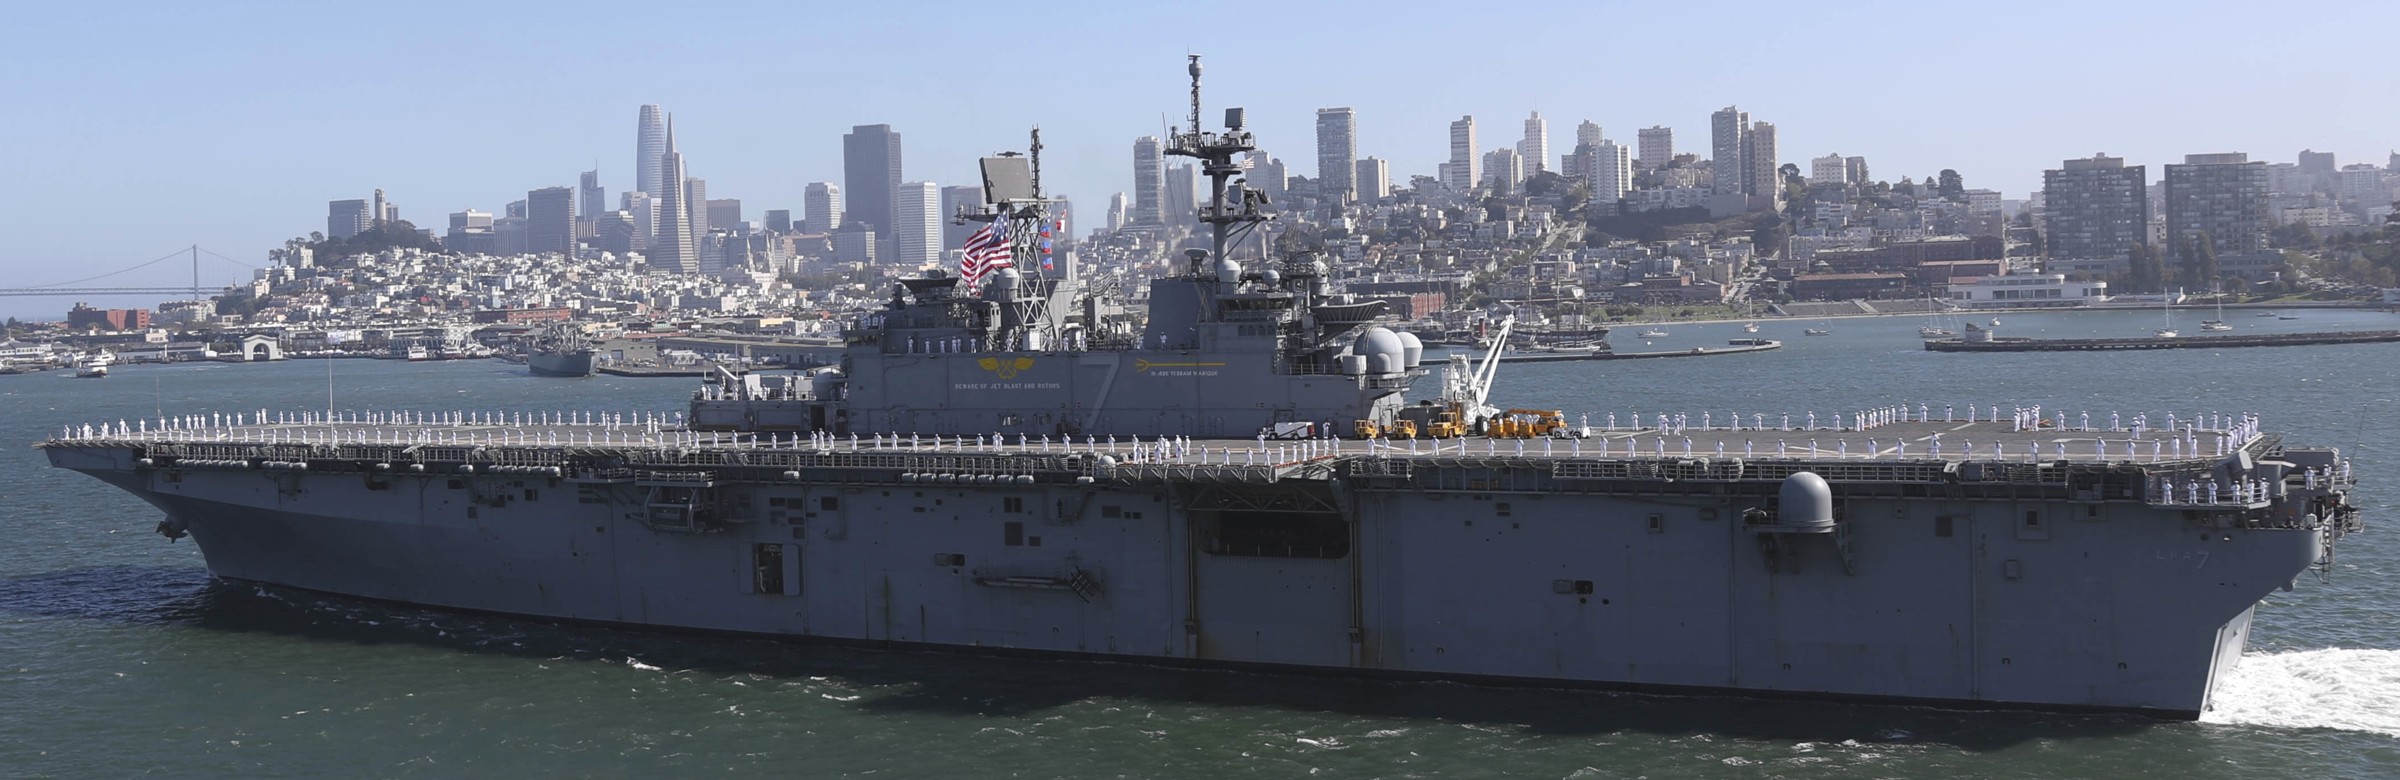 lha-7 uss tripoli america class amphibious assault ship us navy 32